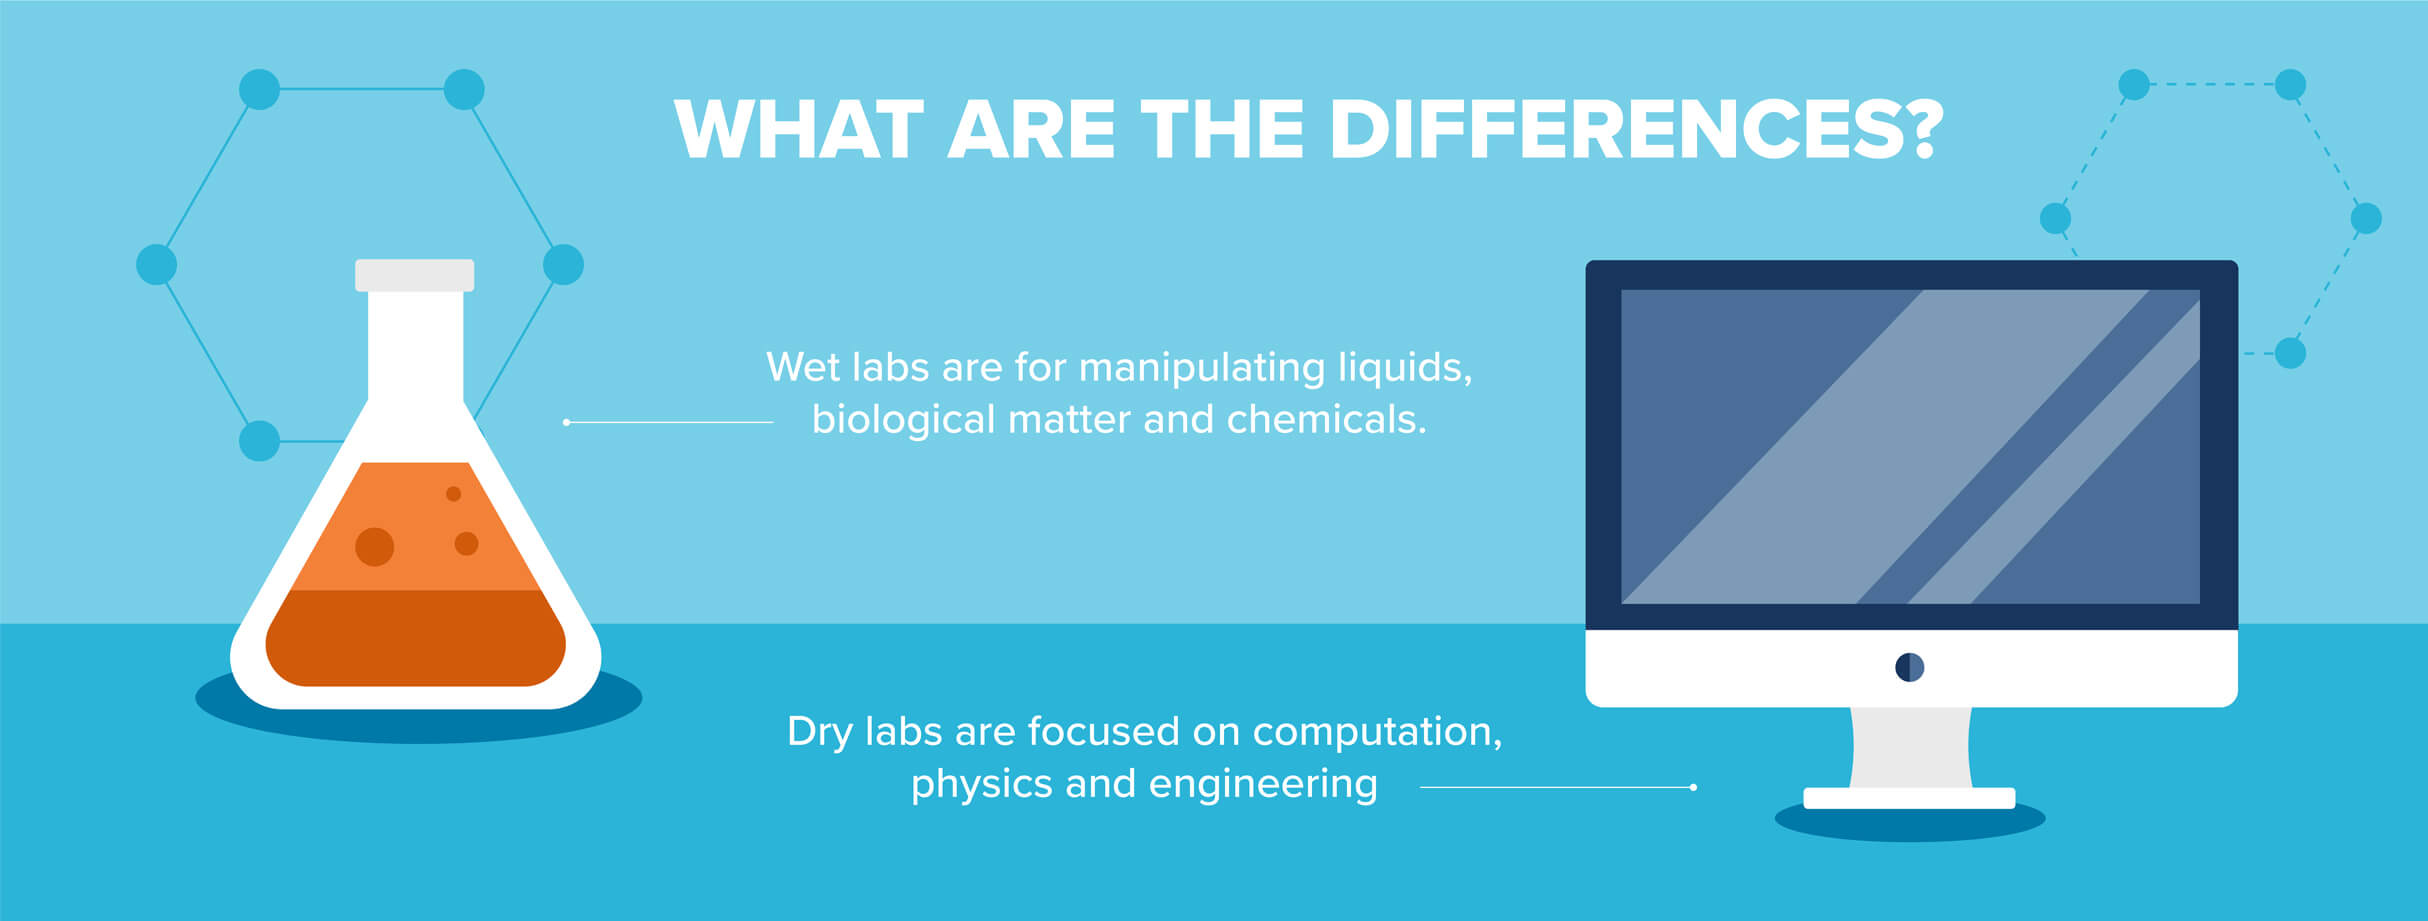 Wet Lab vs Dry Lab Differences